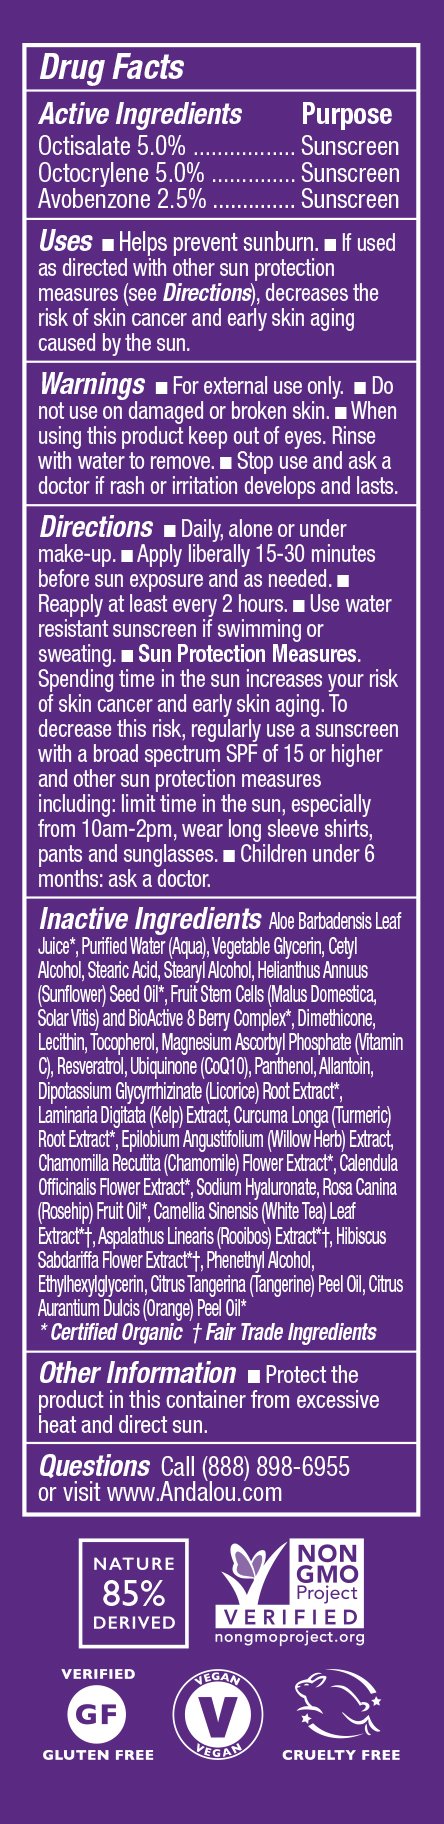 Andalou Naturals Ultra Sheer Daily Defense Facial Lotion, SPF 18, 2.7 oz, with Resveratrol CoQ10 and Antioxidants, Lightweight, Hydrating Facial Moisturizer - BeesActive Australia